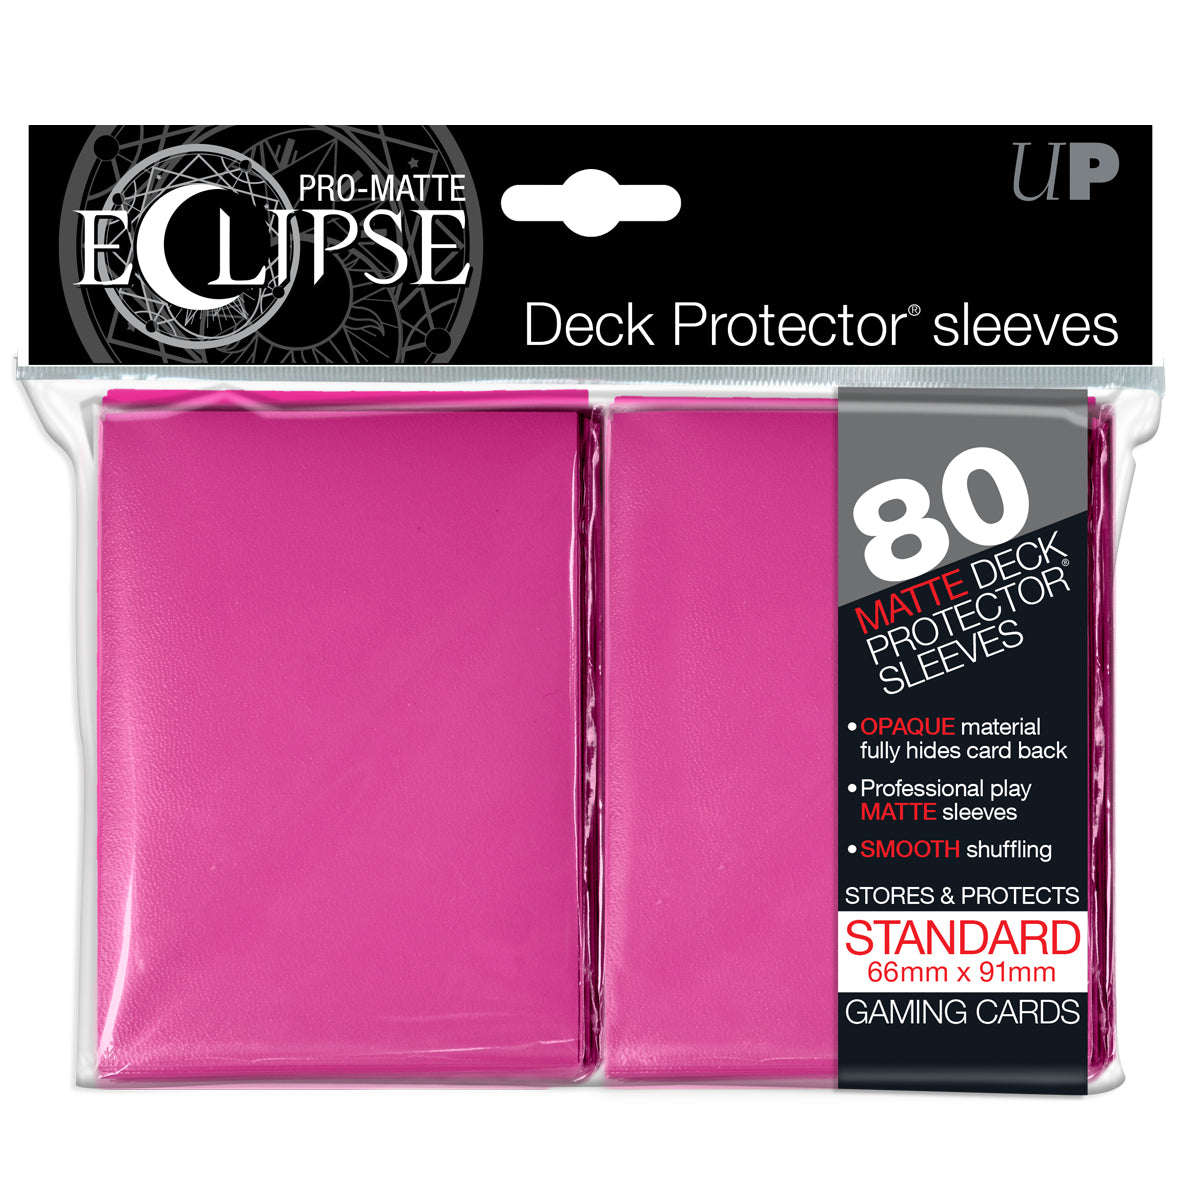 Ultra PRO Card Sleeve Pro-Matte Eclipse Standard 80ct - Pink